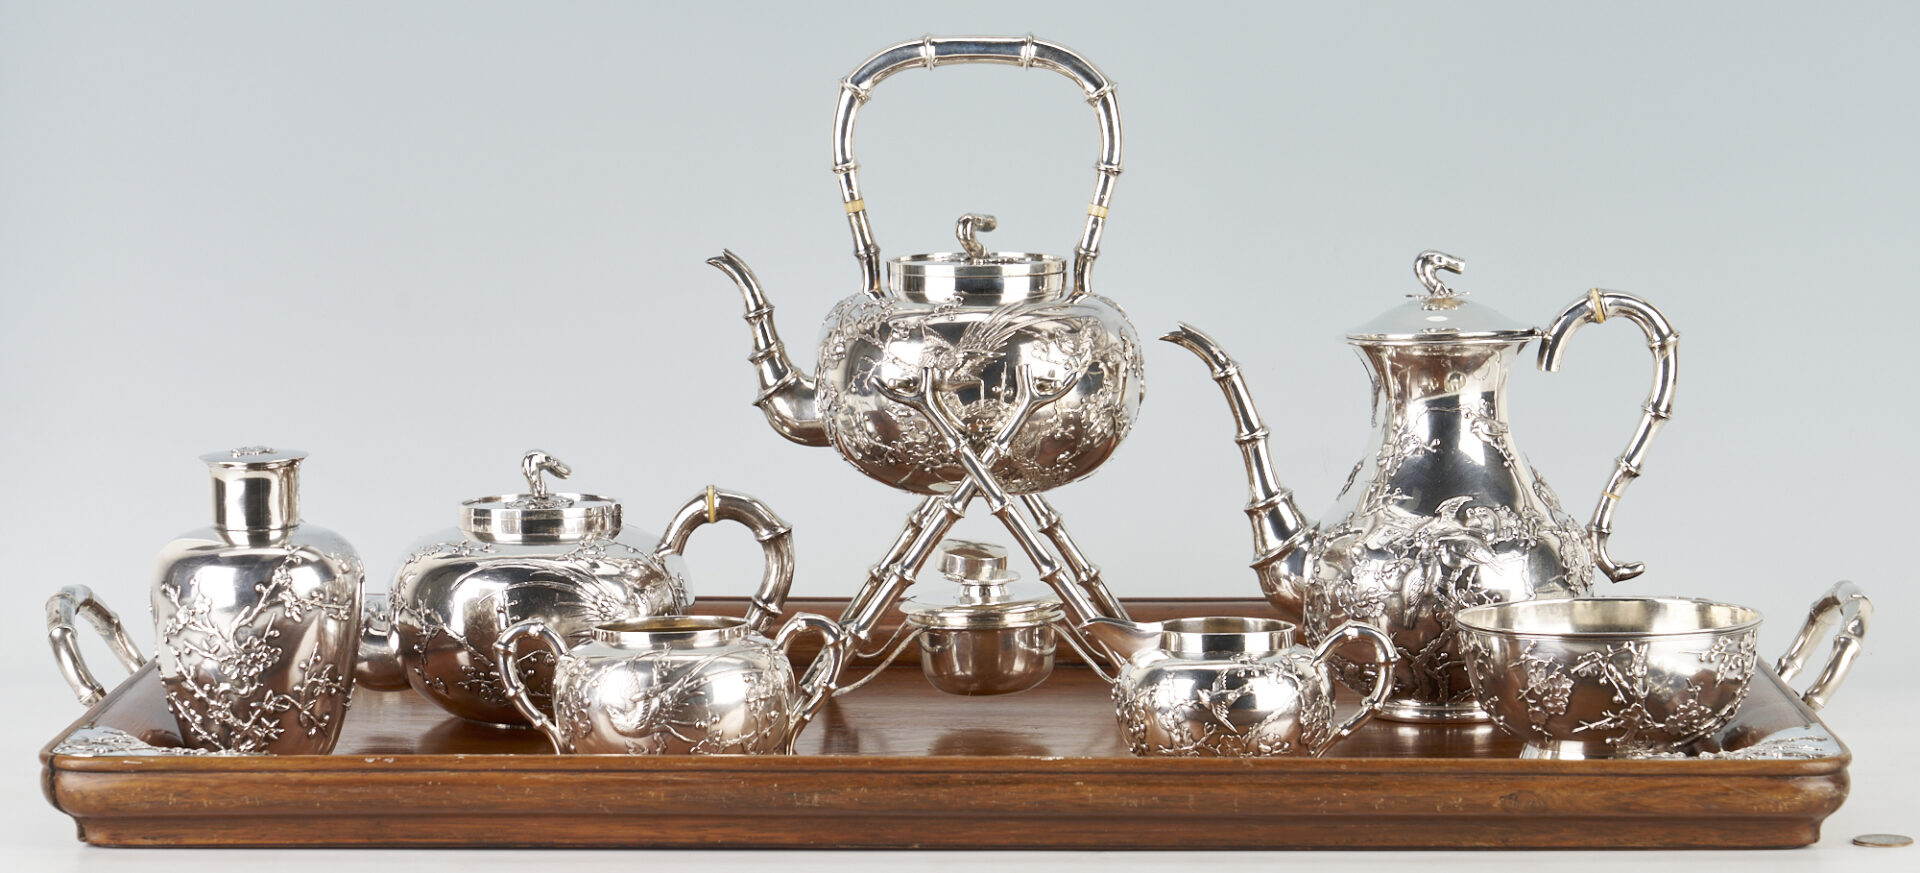 Lot 1: Wang Hing Chinese Export Silver Tea Set with Tray